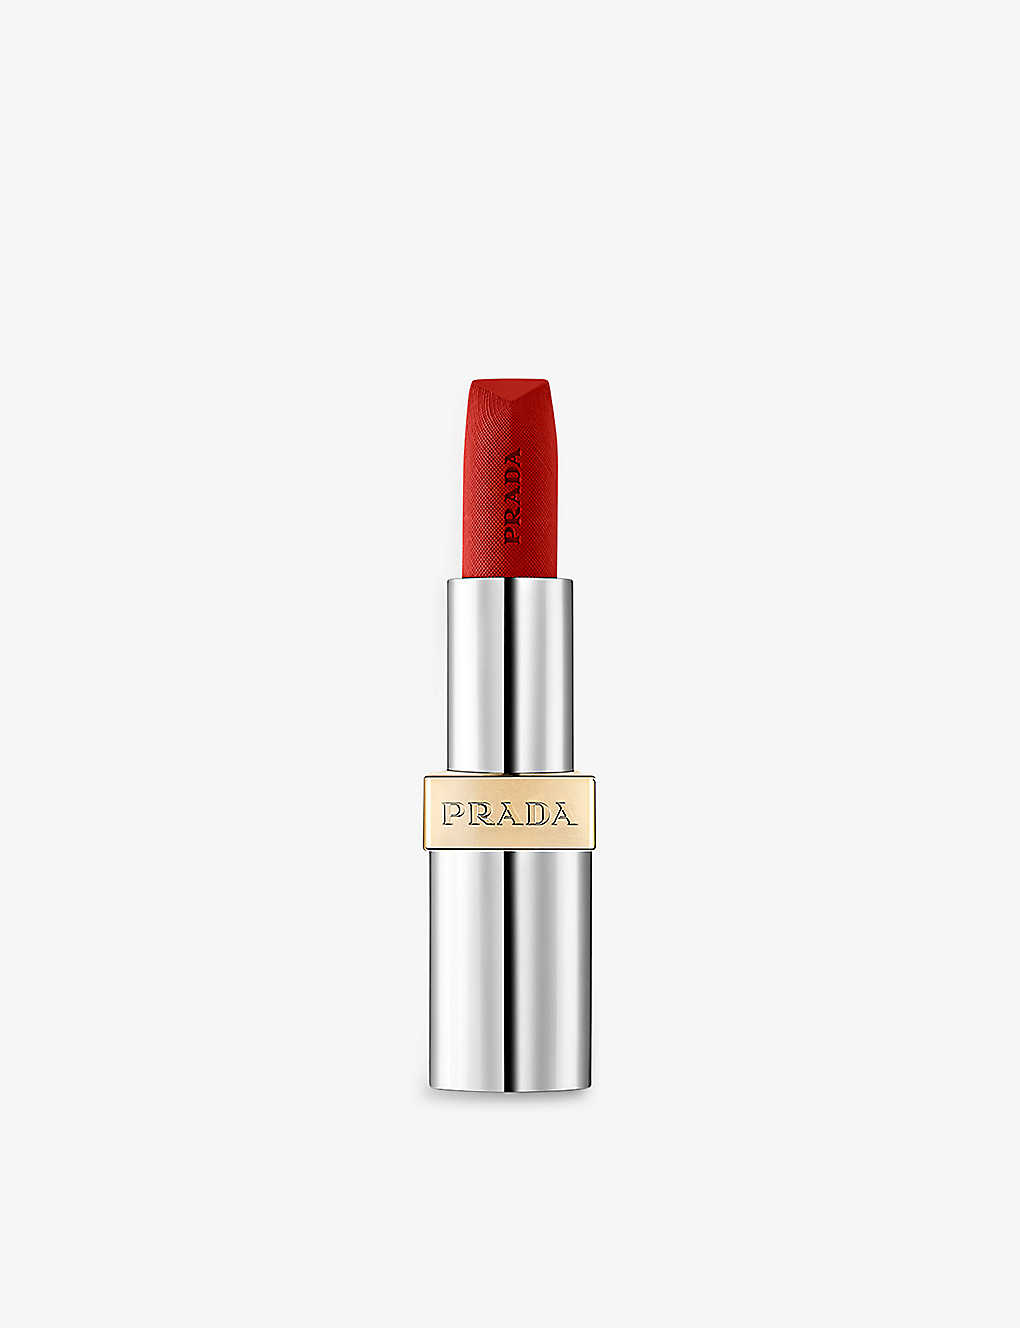 Prada Amber Hyper Matte Monochrome Refillable Lipstick 3.8g